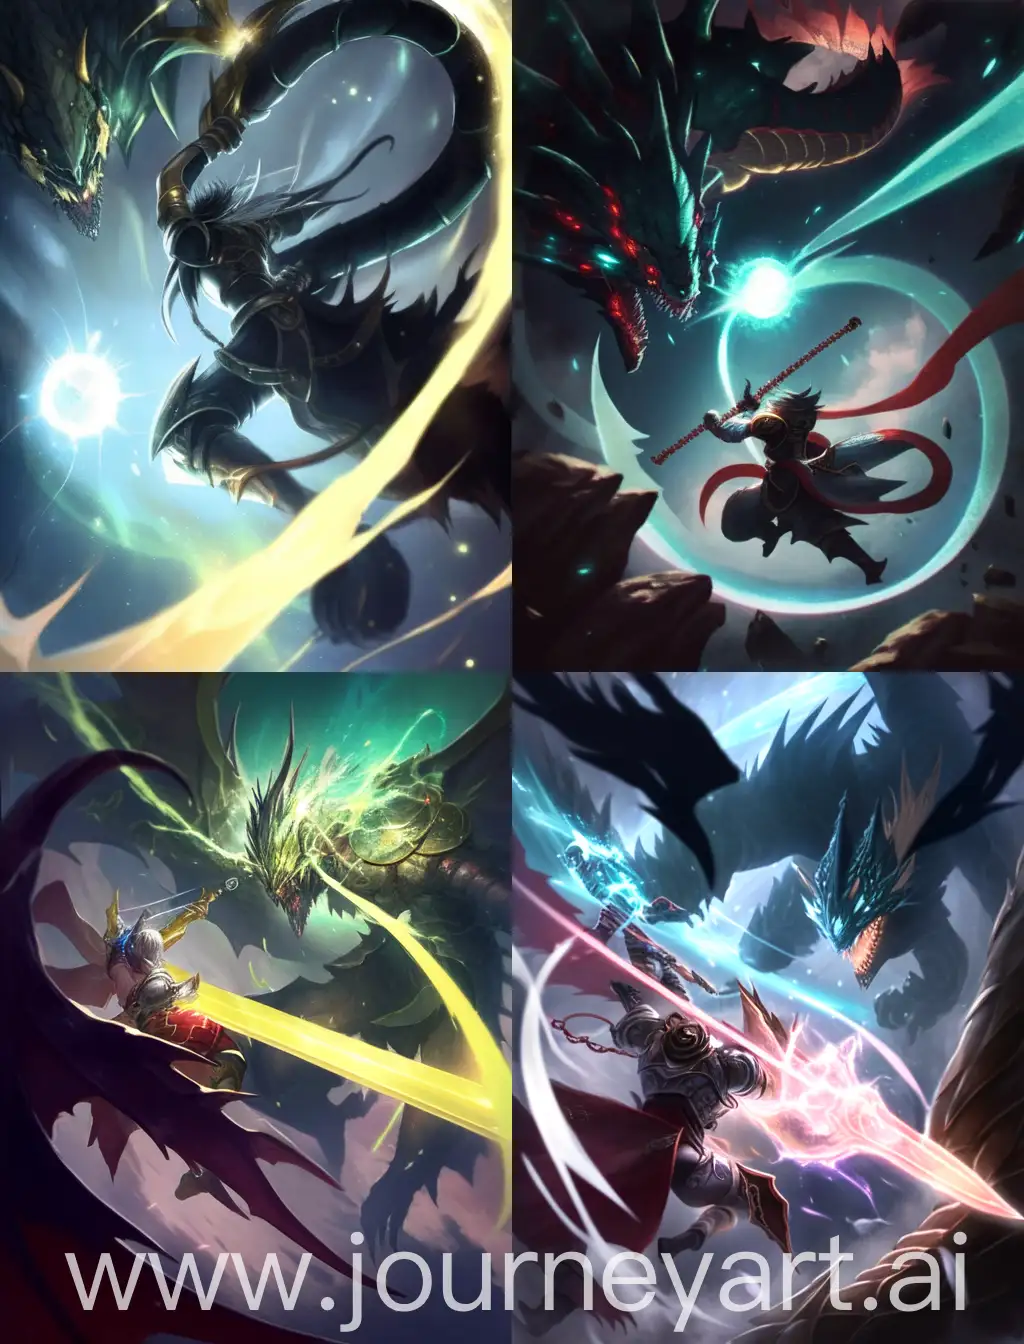 Celestial-Warrior-Battles-Shining-Dragon